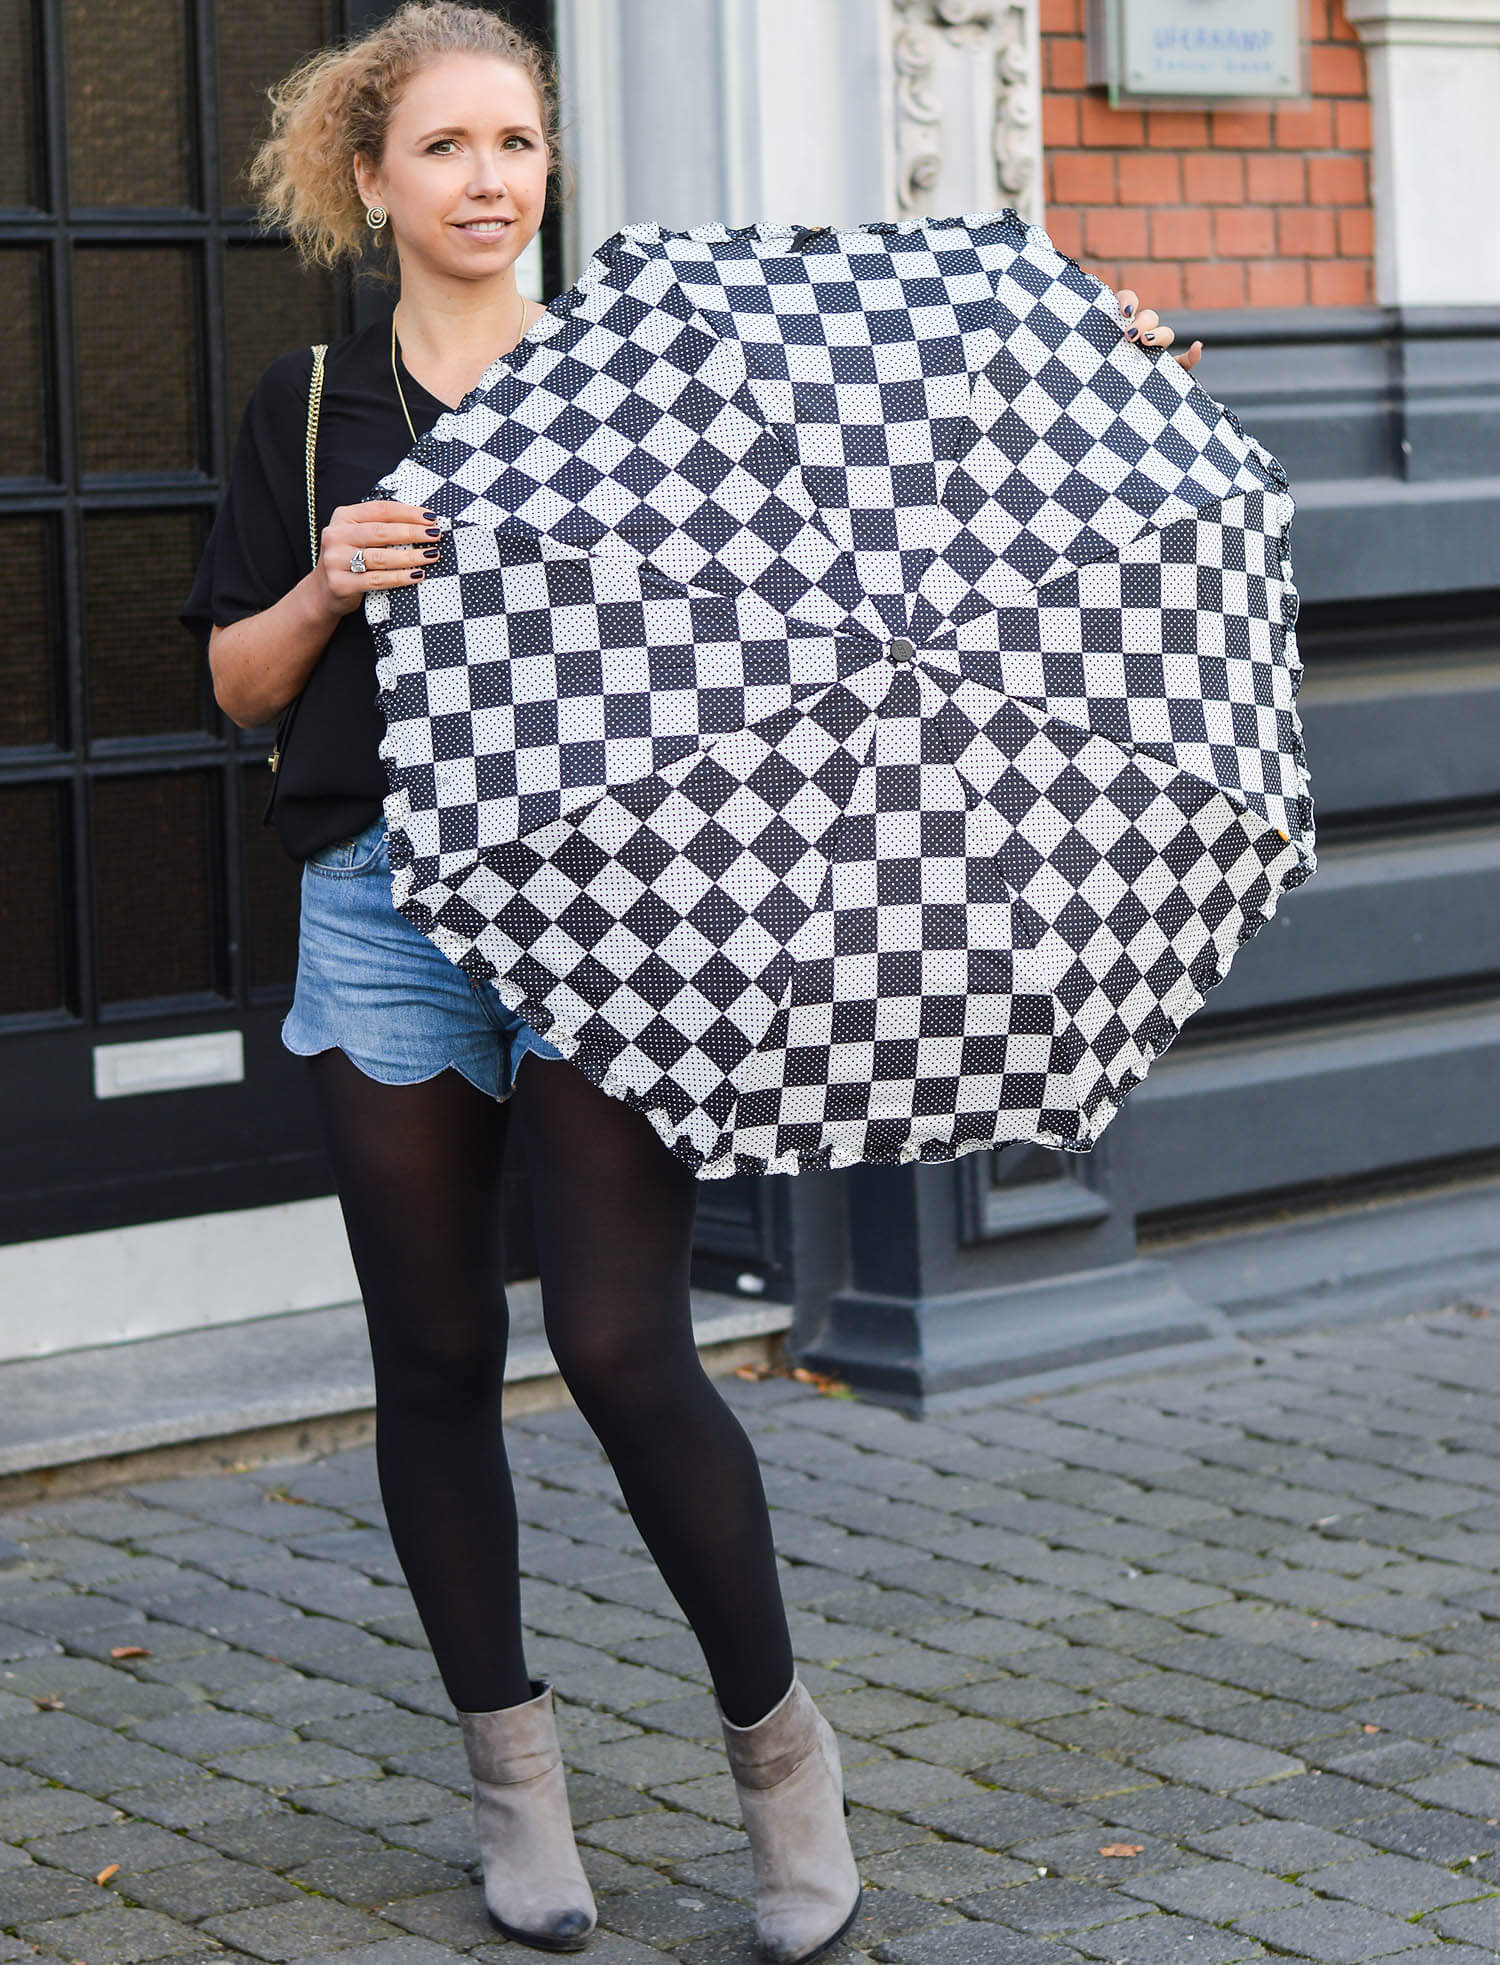 Kationette-fashionblog-nrw-Outfit-Denim-Hotpants-Black-Blouse-Furla-and-new-Pocket-Umbrella-from-Zest